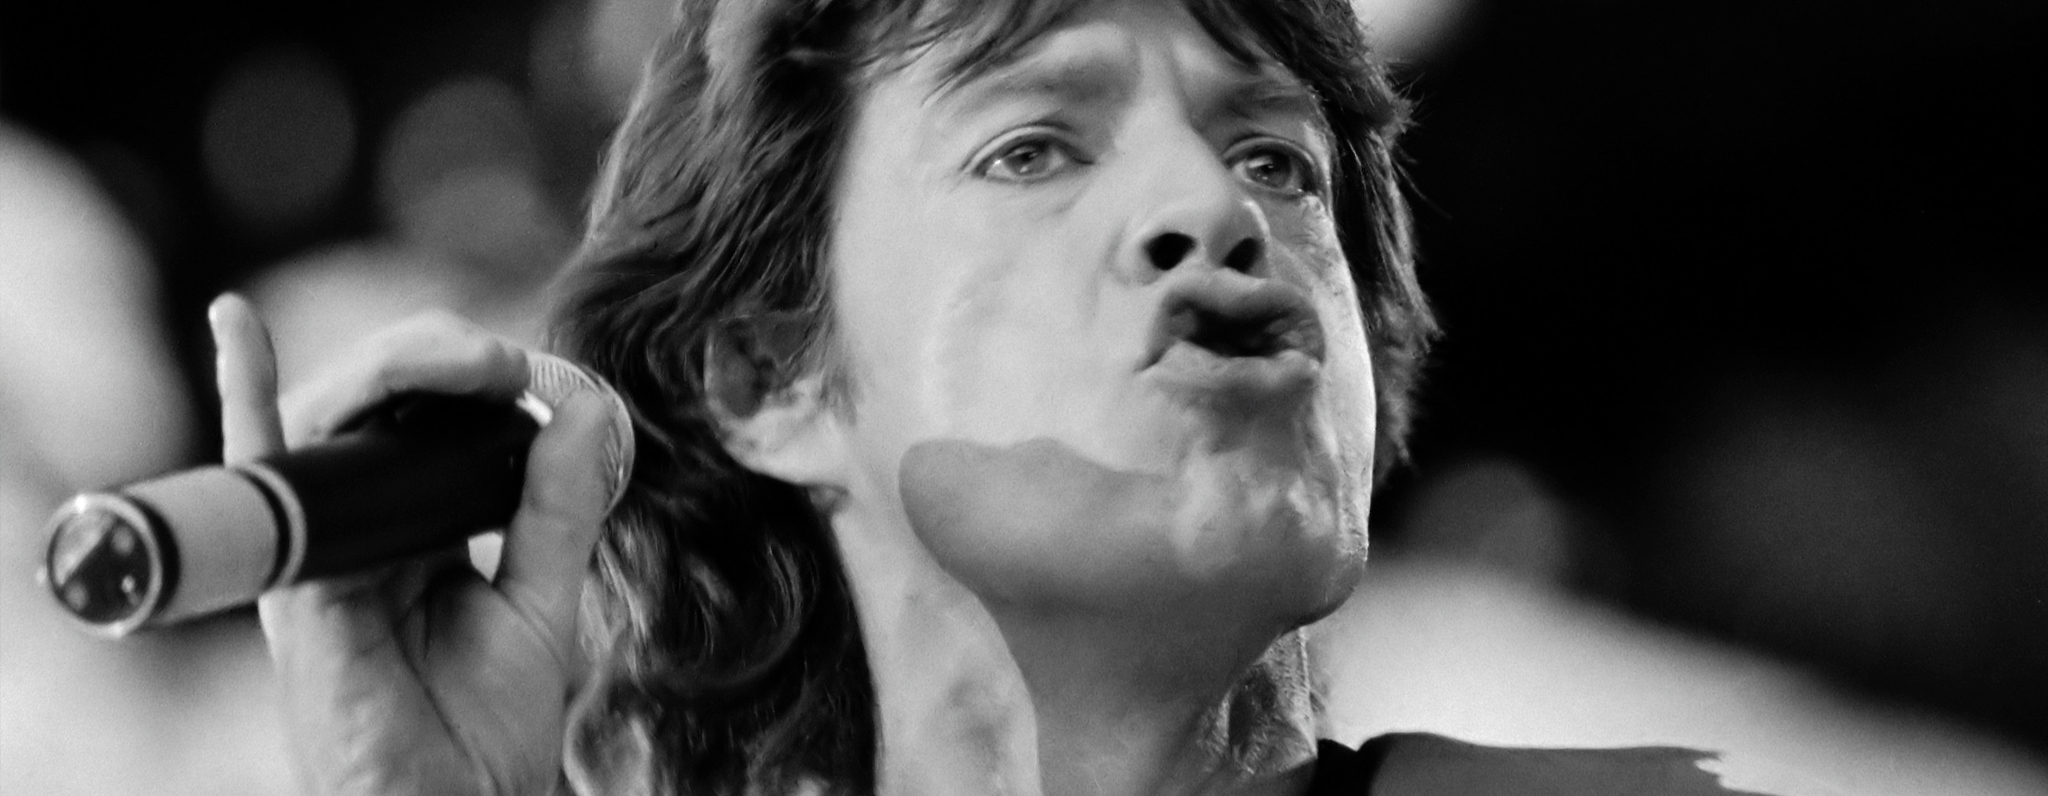 Mick Jagger Drinking A Beer